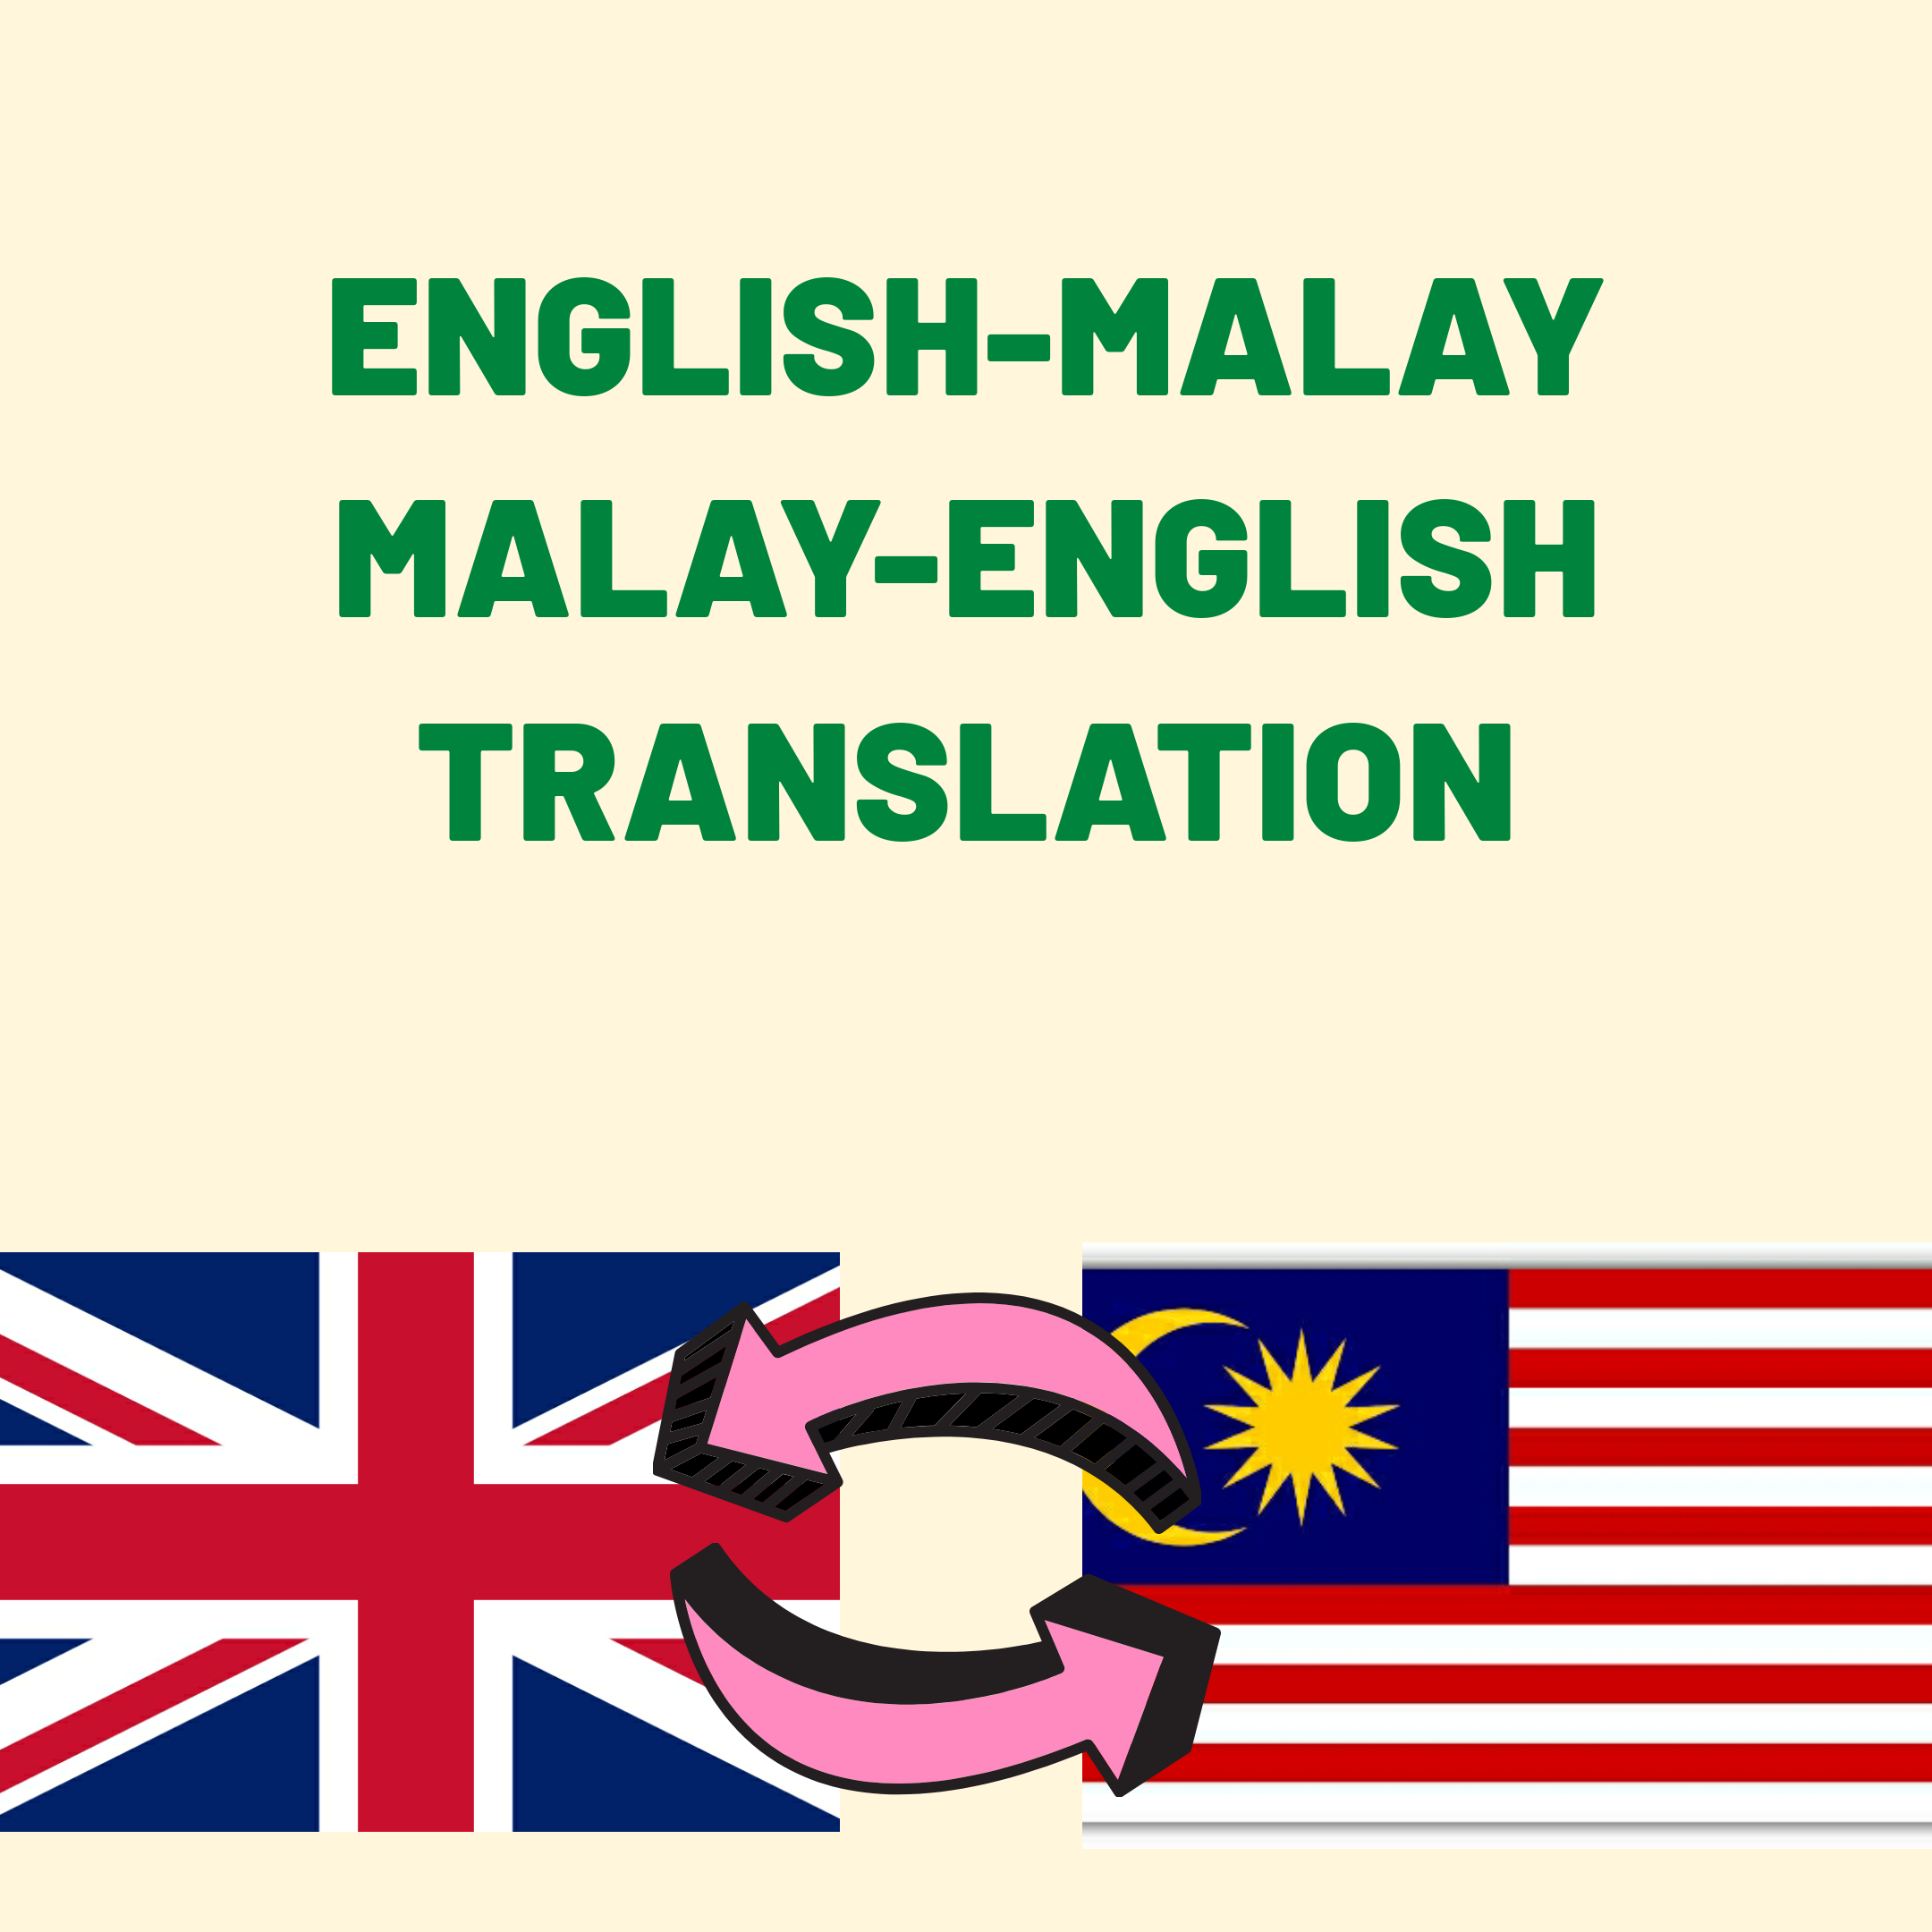 Translate to malay to english